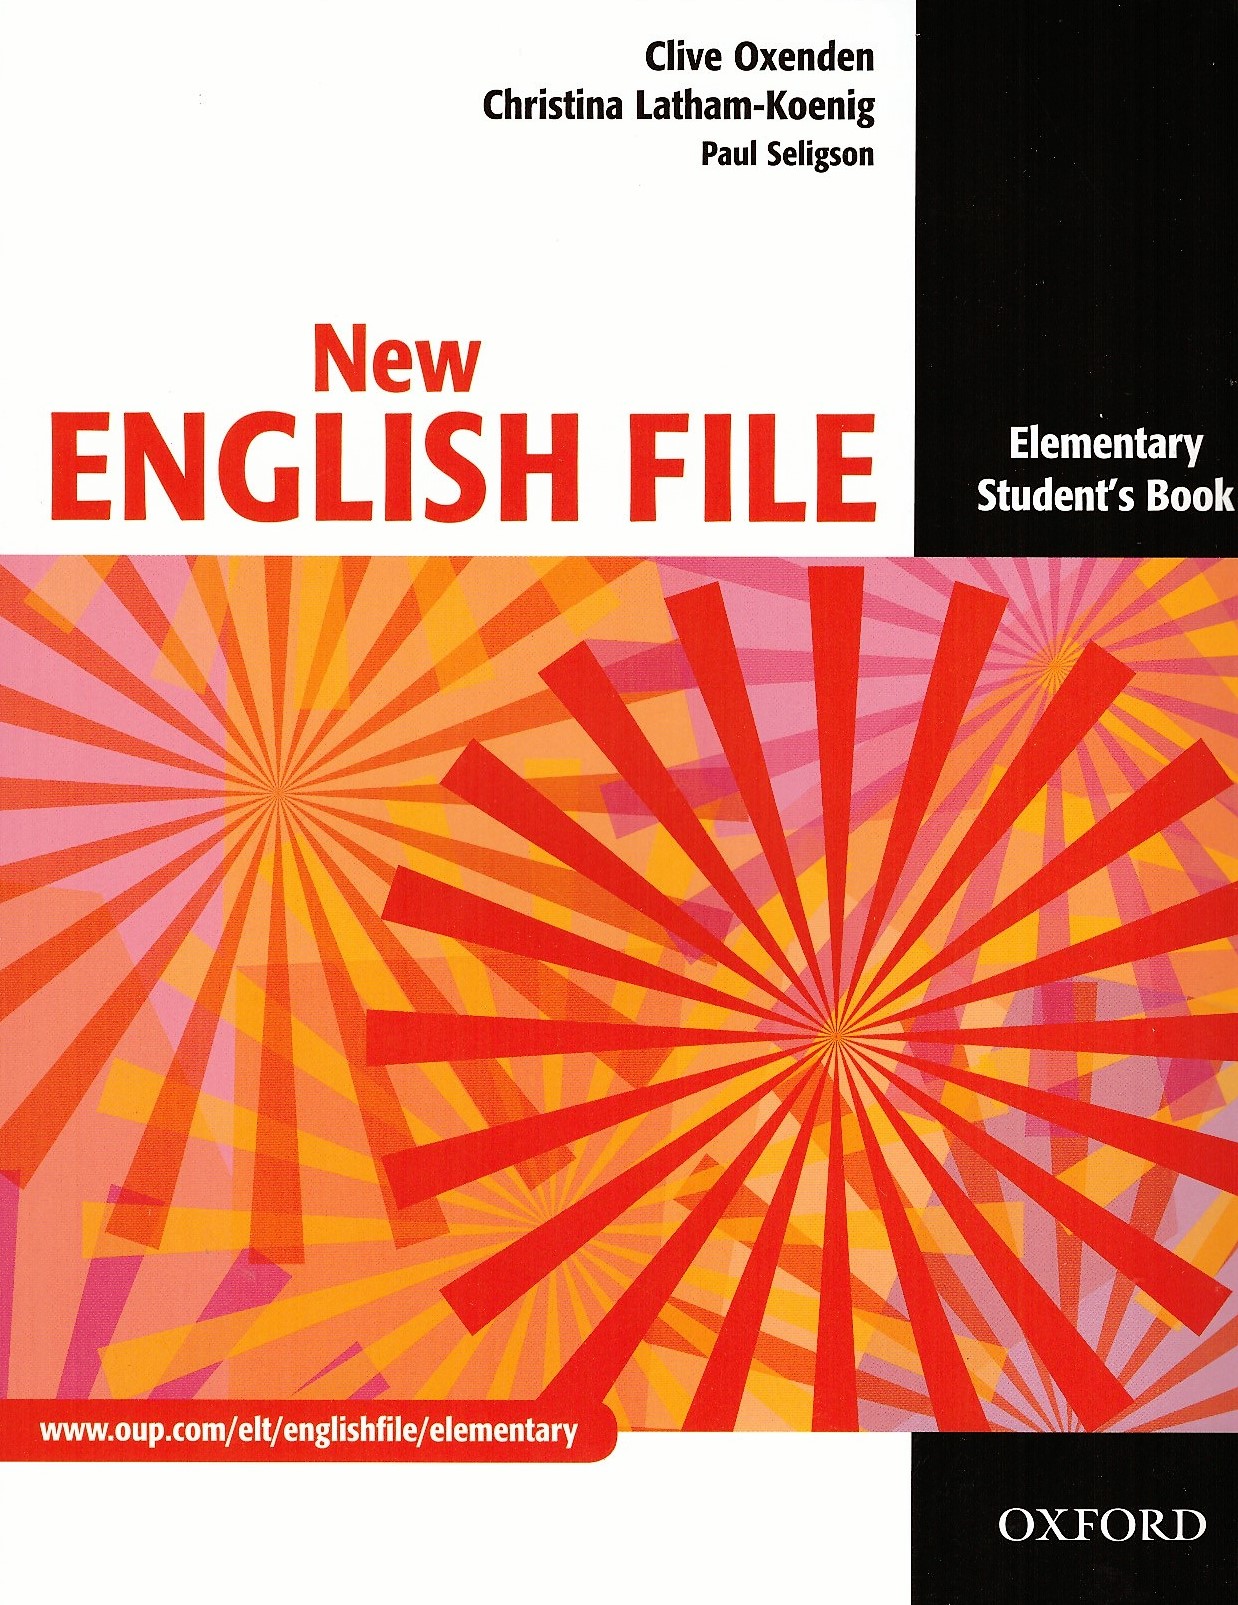 New English File Elementary Student's Book / Учебник